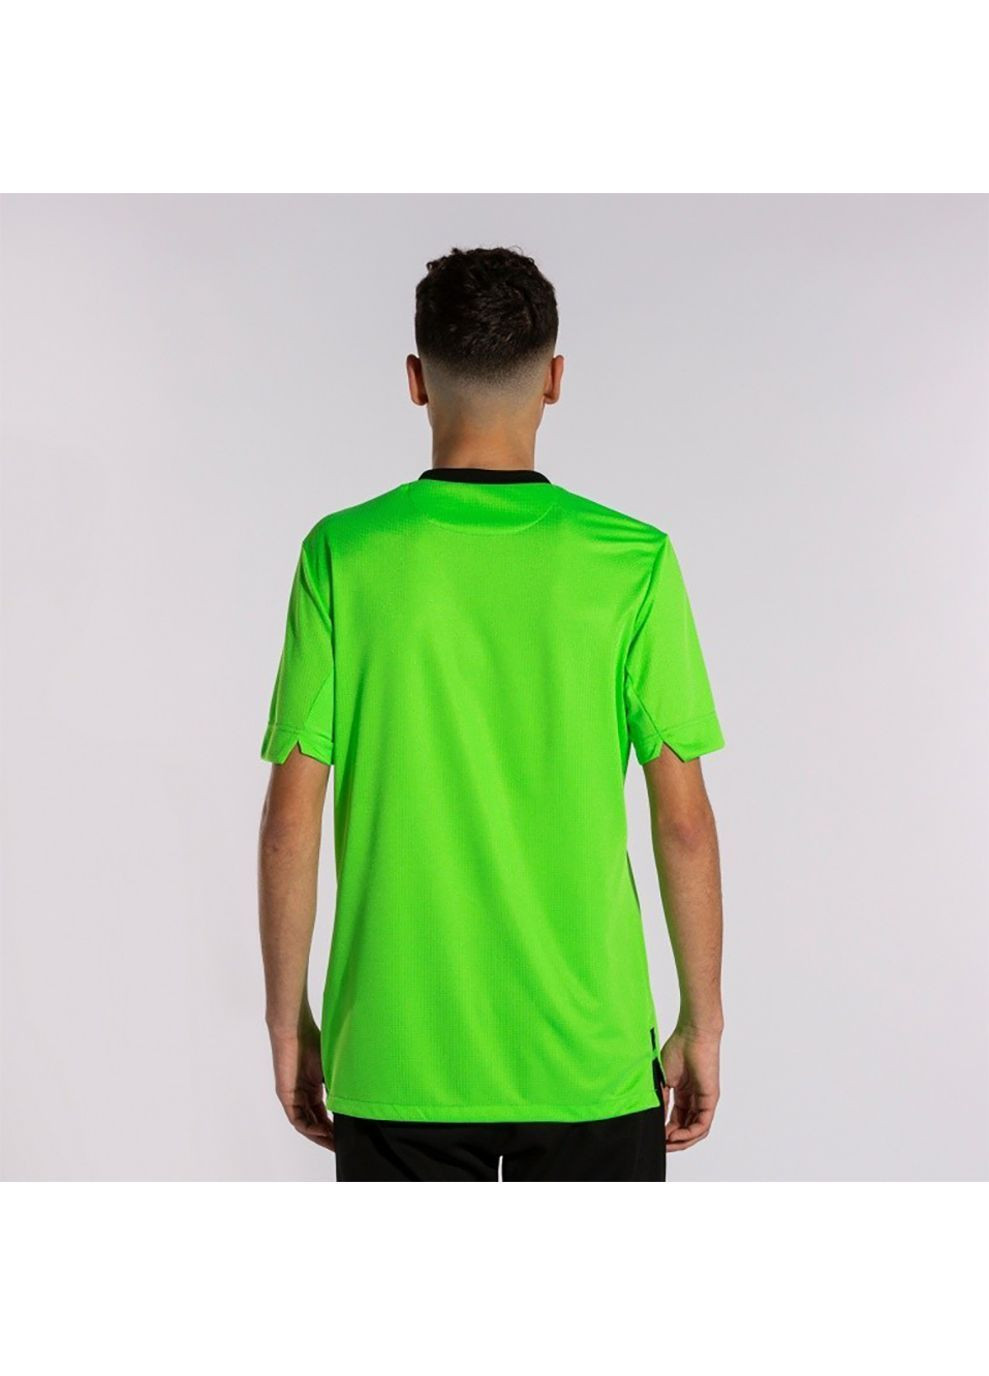 Зеленая футболка gold iv short sleeve t-shirt fluor green black зеленый,черный Joma